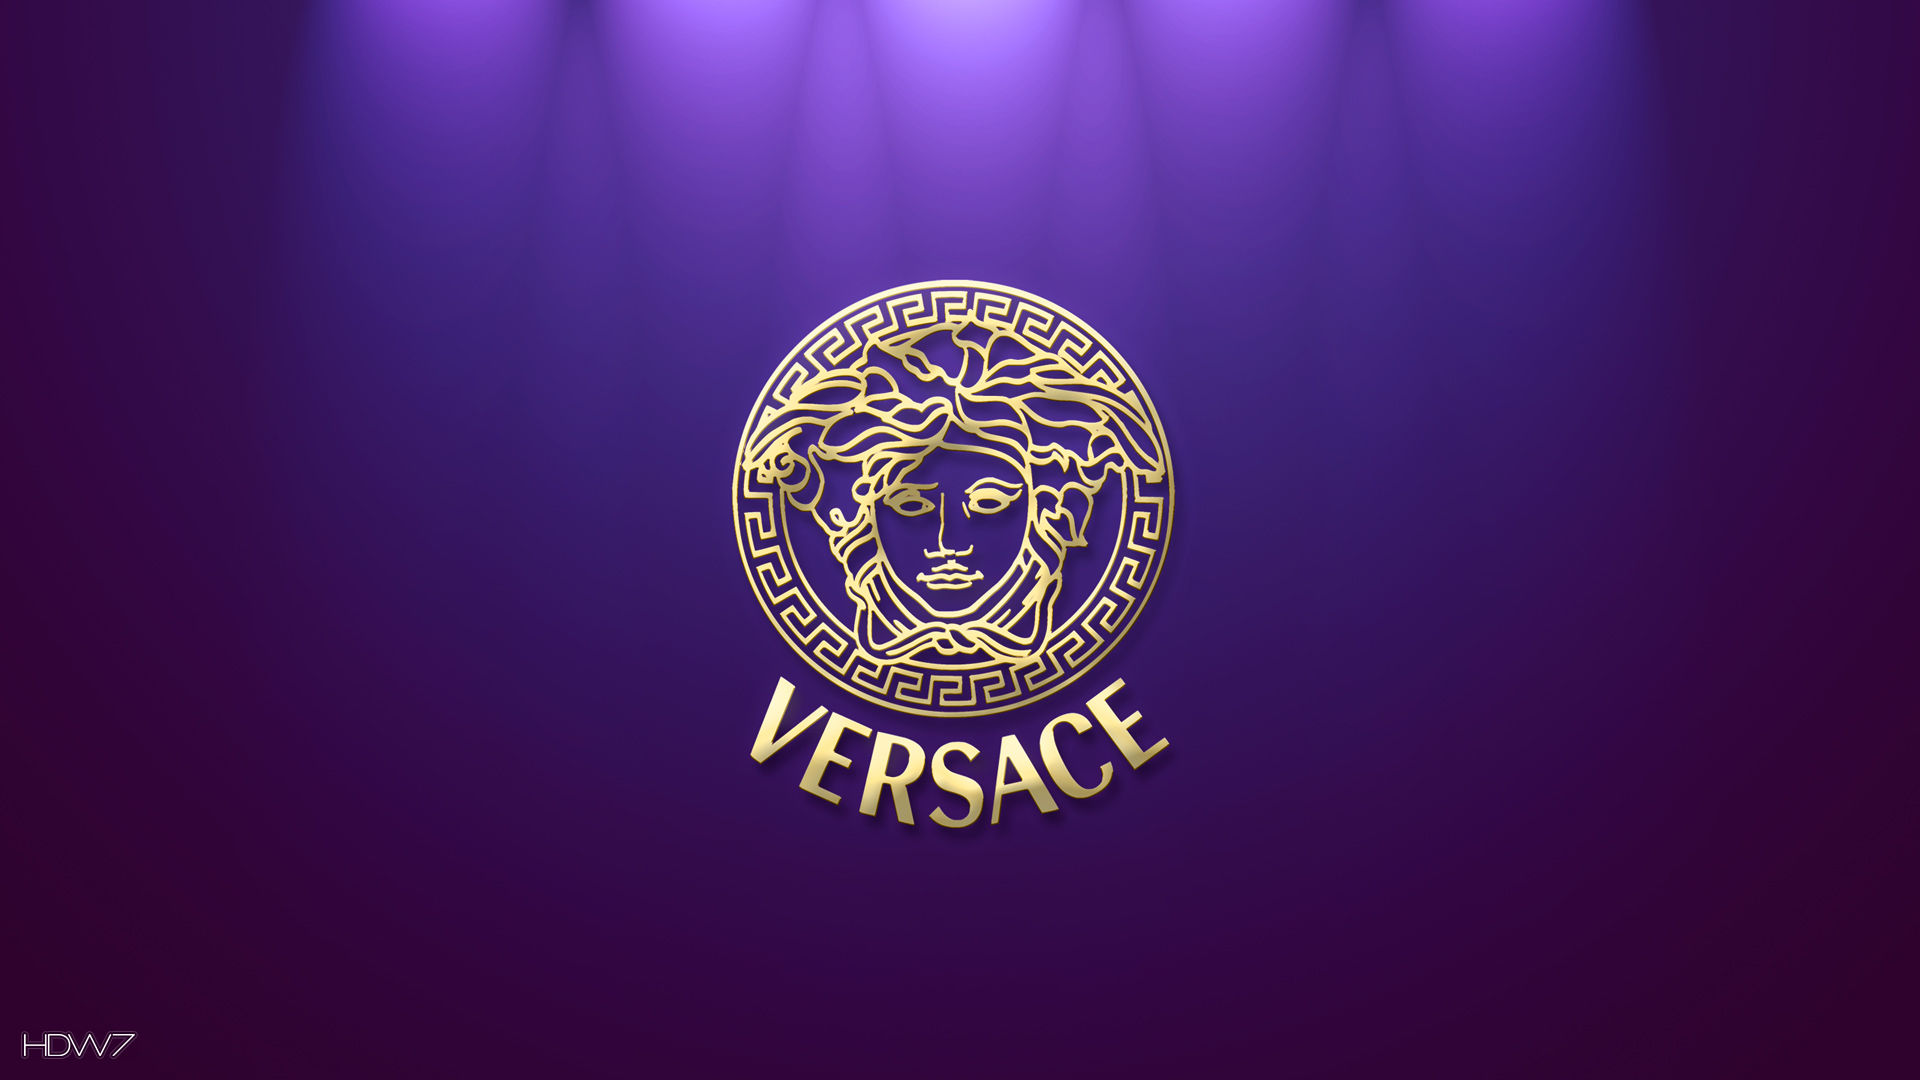 Versace Medusa Logo Pictures